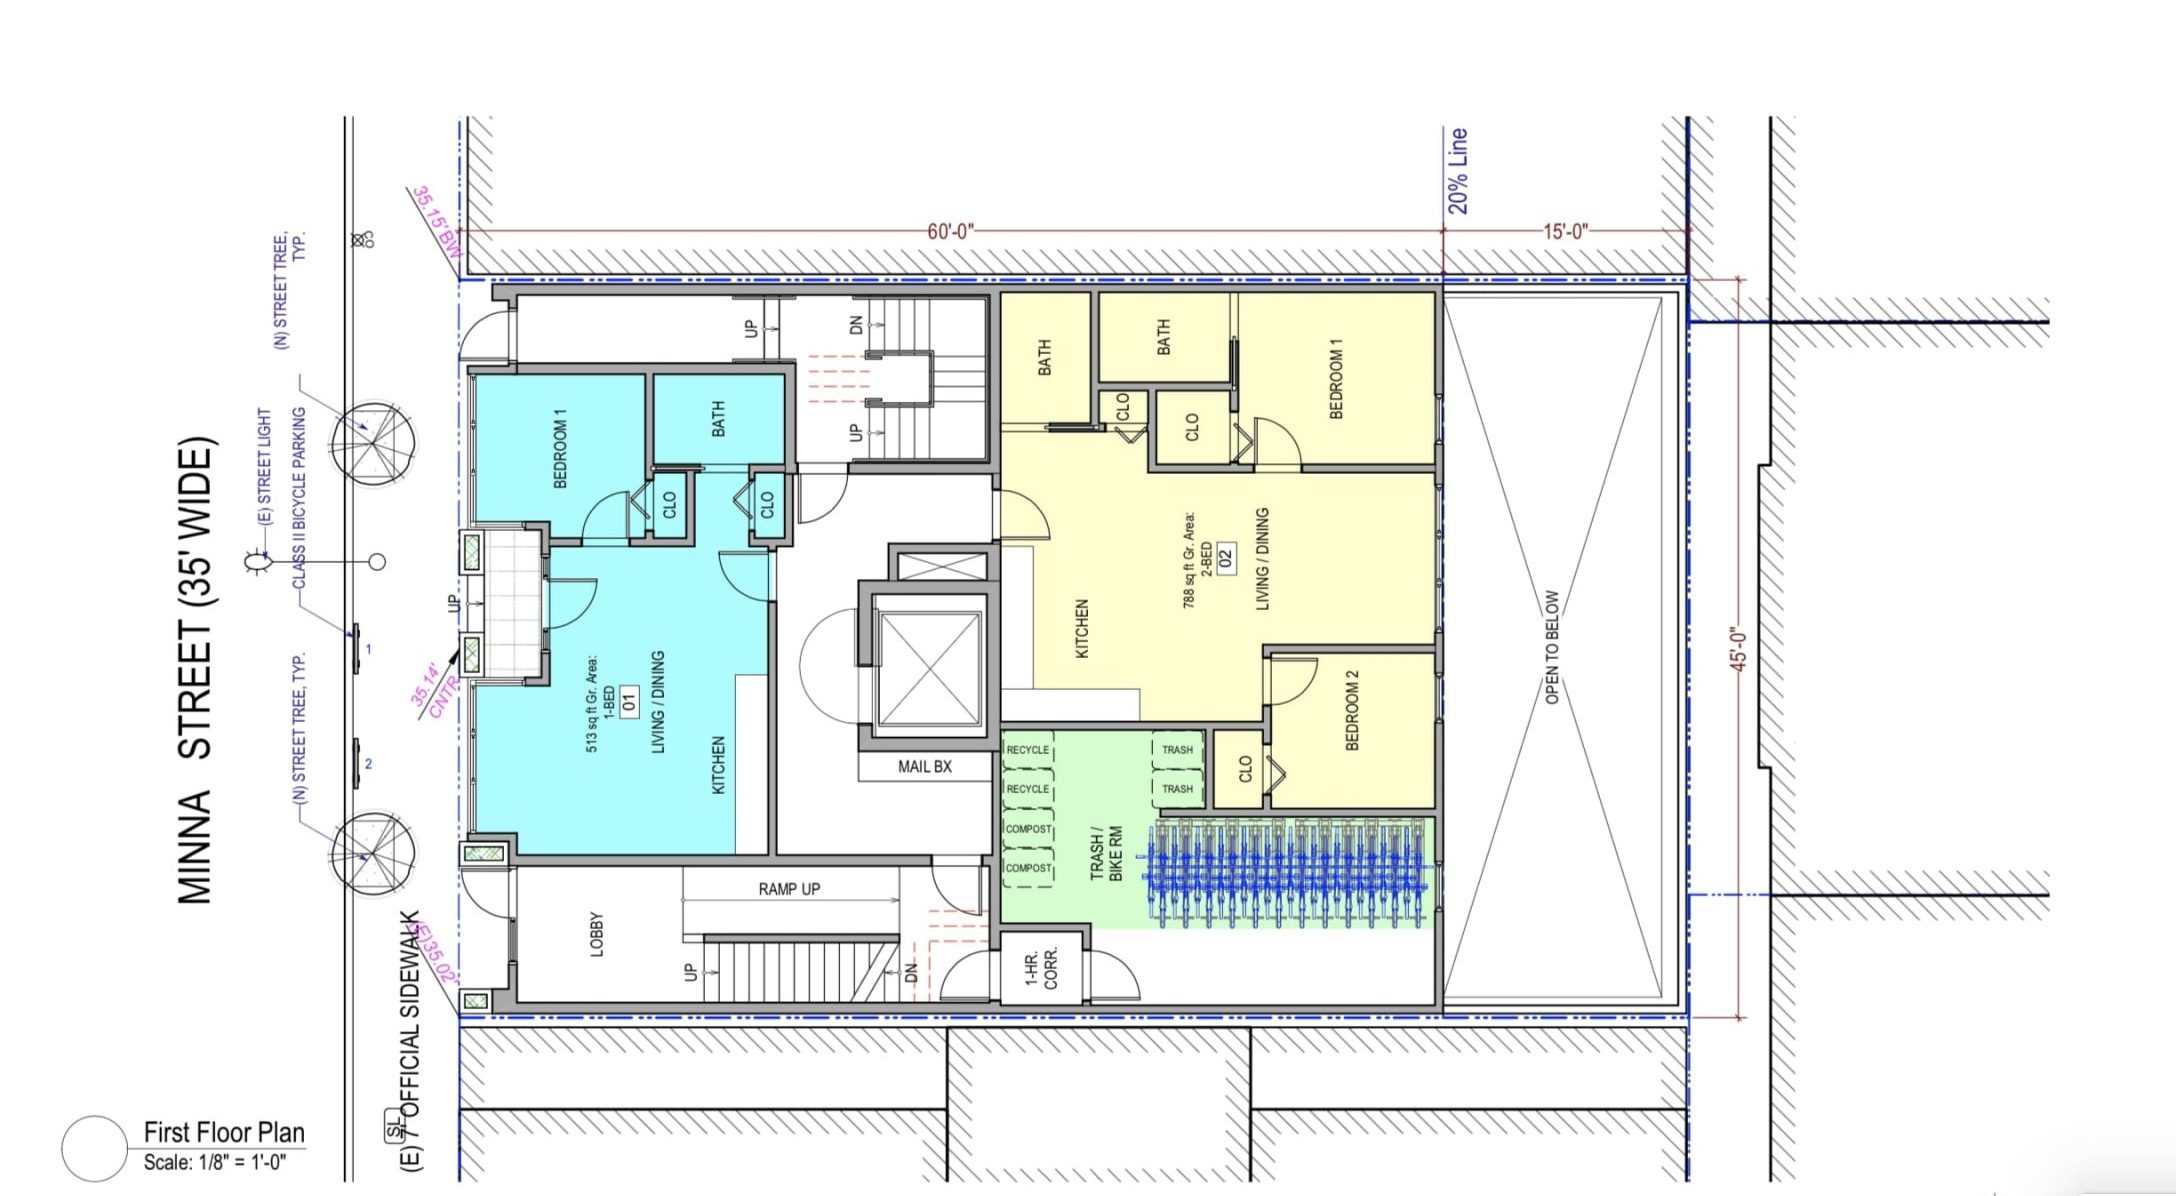 Proposed First Floor Plan Minna Street